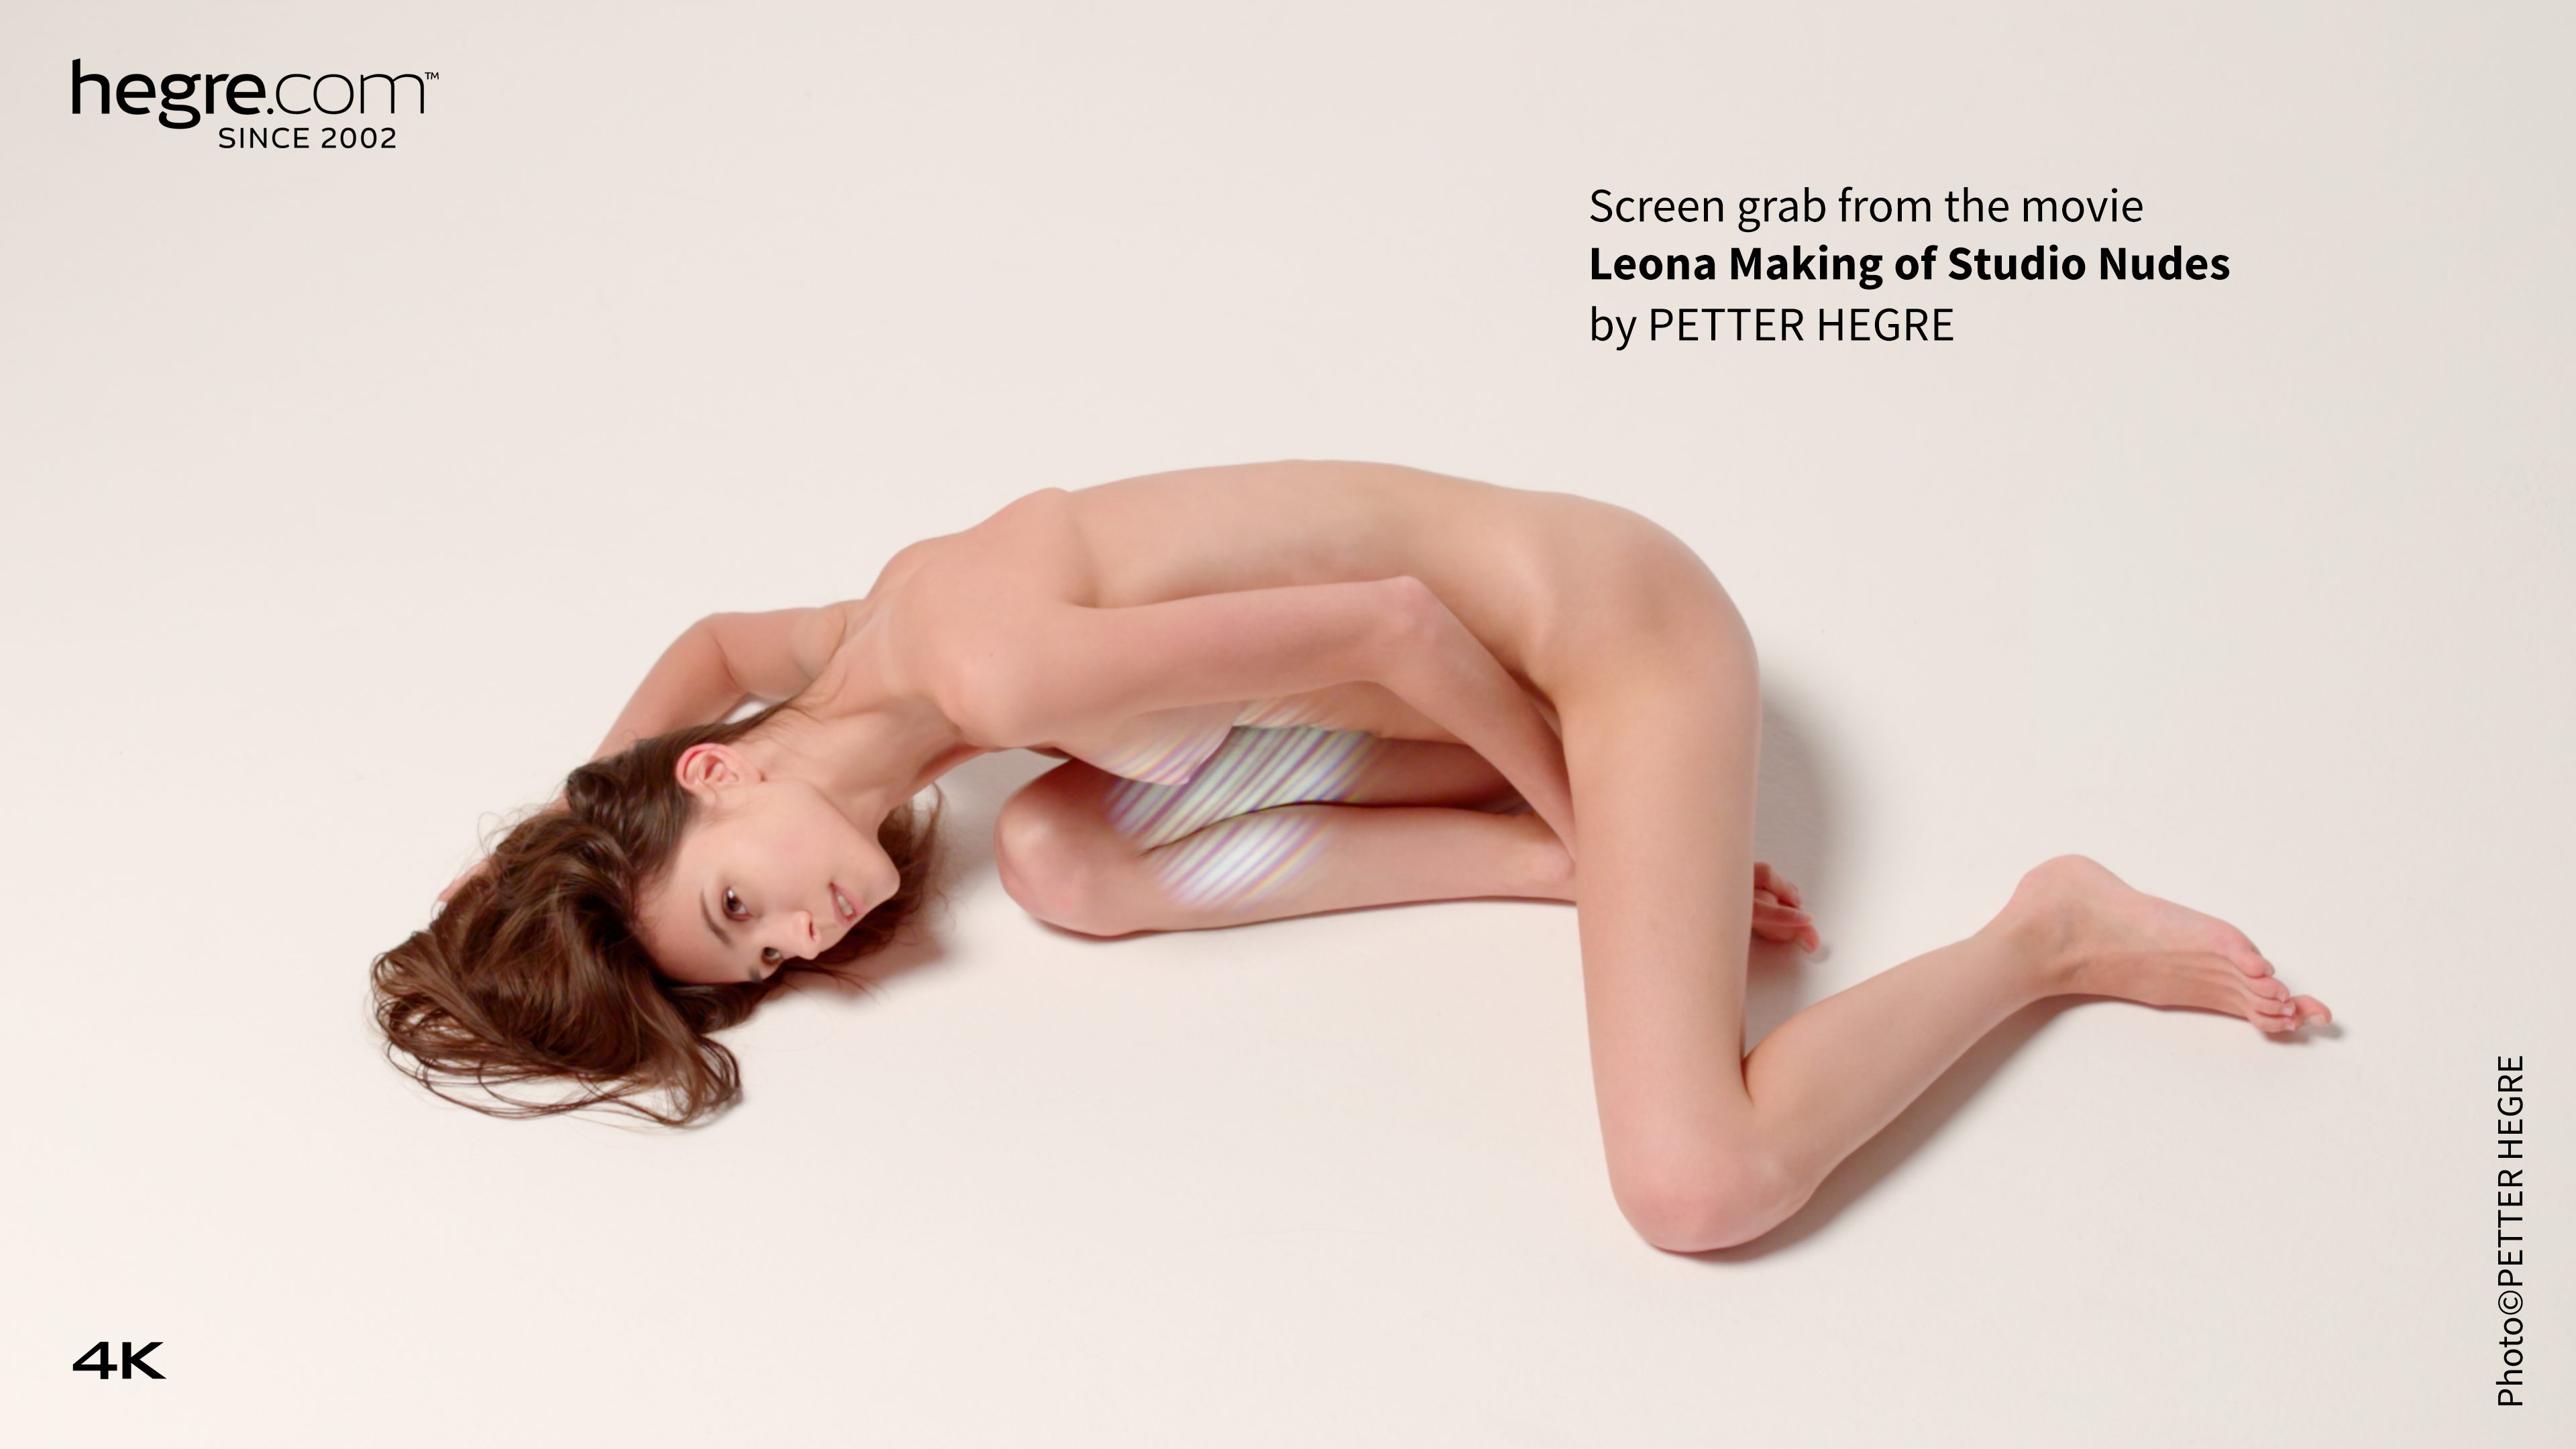 leona-making-of-studio-nudes-19.jpg